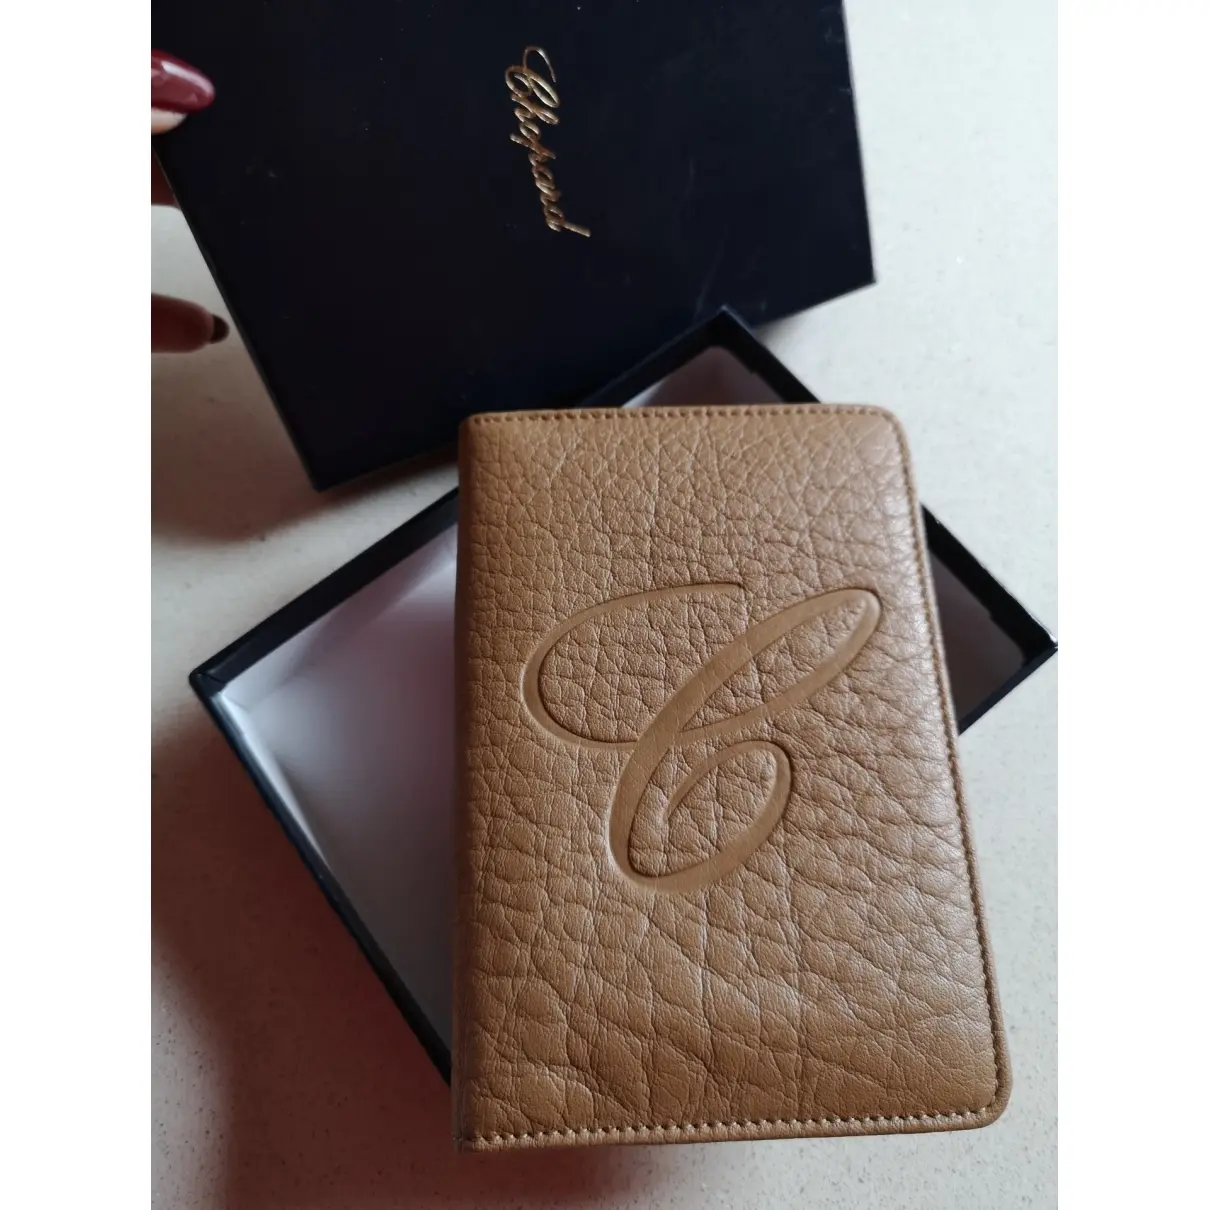 Buy Chopard Leather purse online